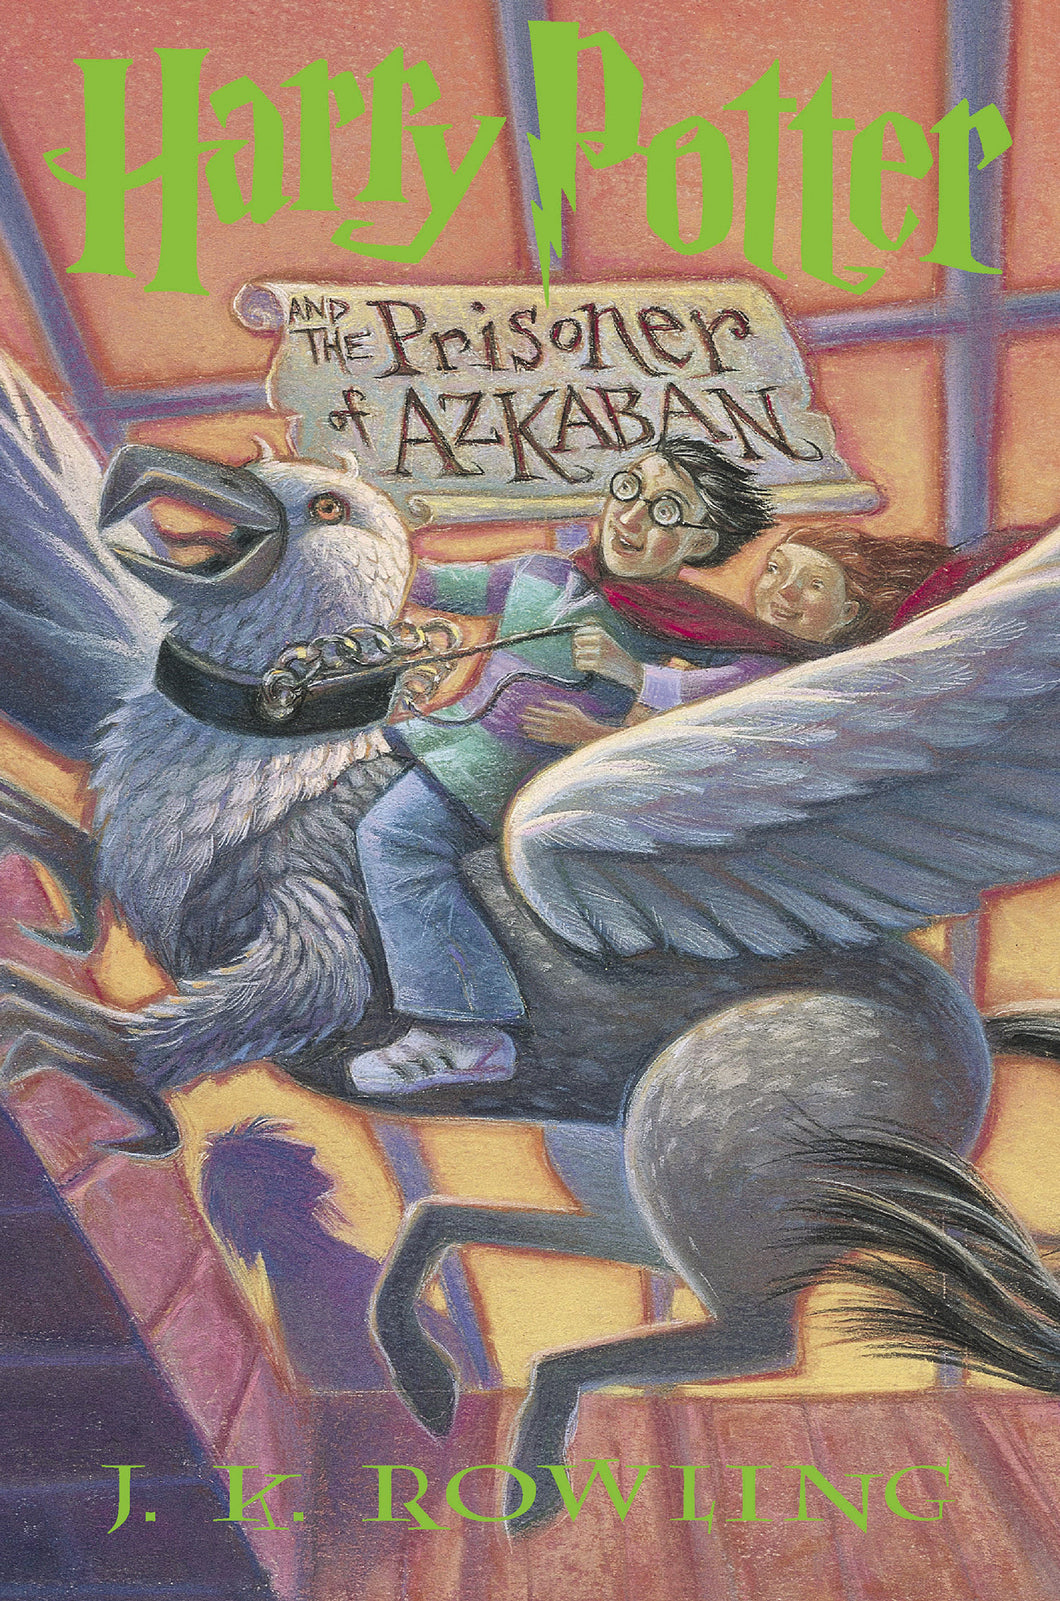 Harry Potter and the Prisoner of Azkaban #3 Paperback